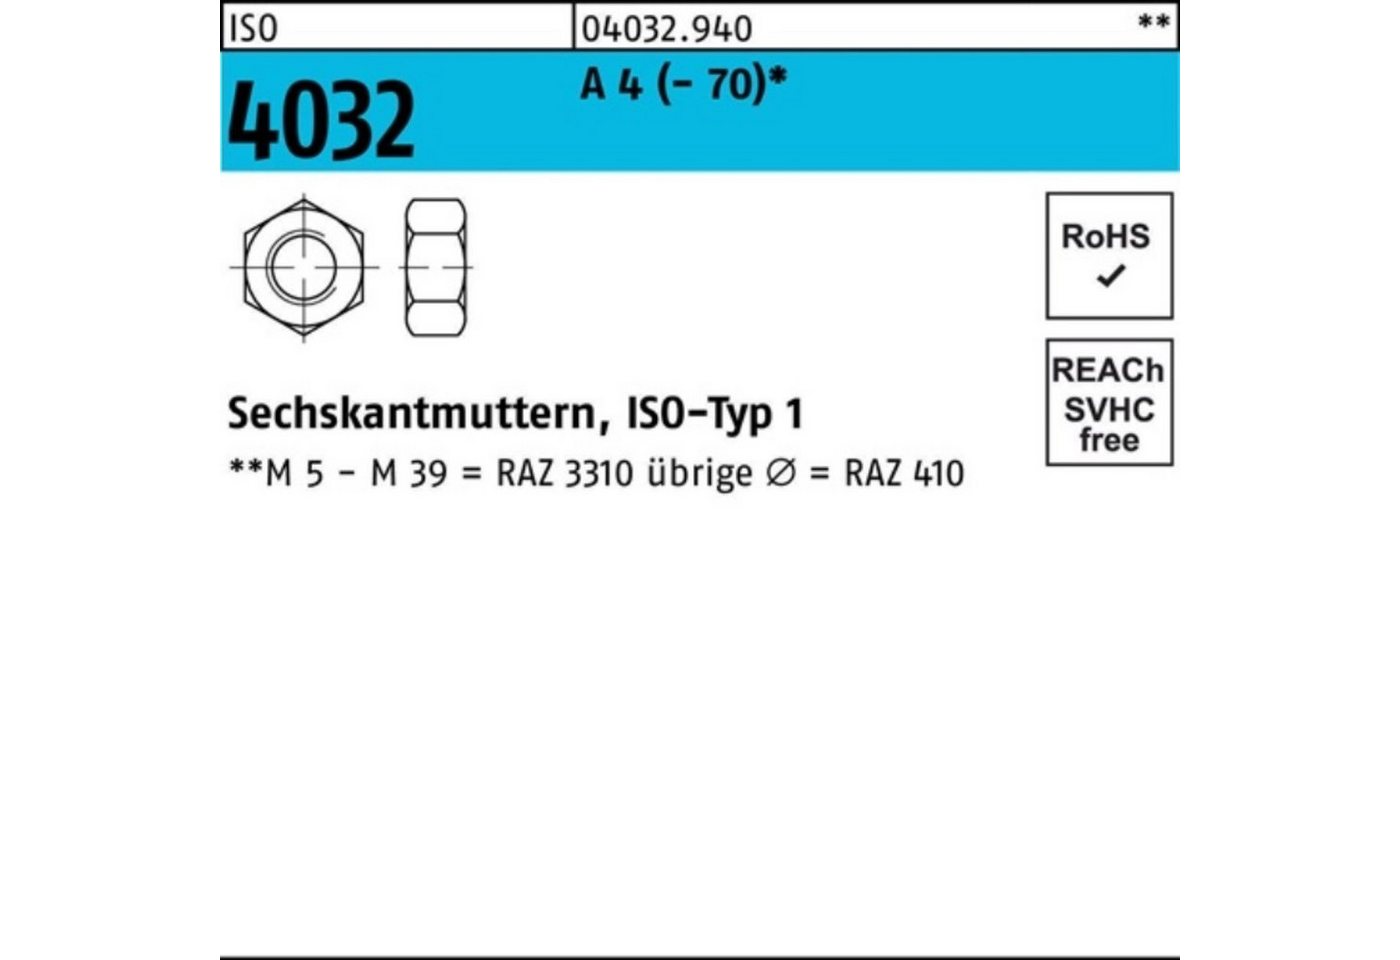 Bufab Muttern 100er Pack Sechskantmutter ISO 4032 M20 A 4 (70) 25 Stück ISO 4032 von Bufab